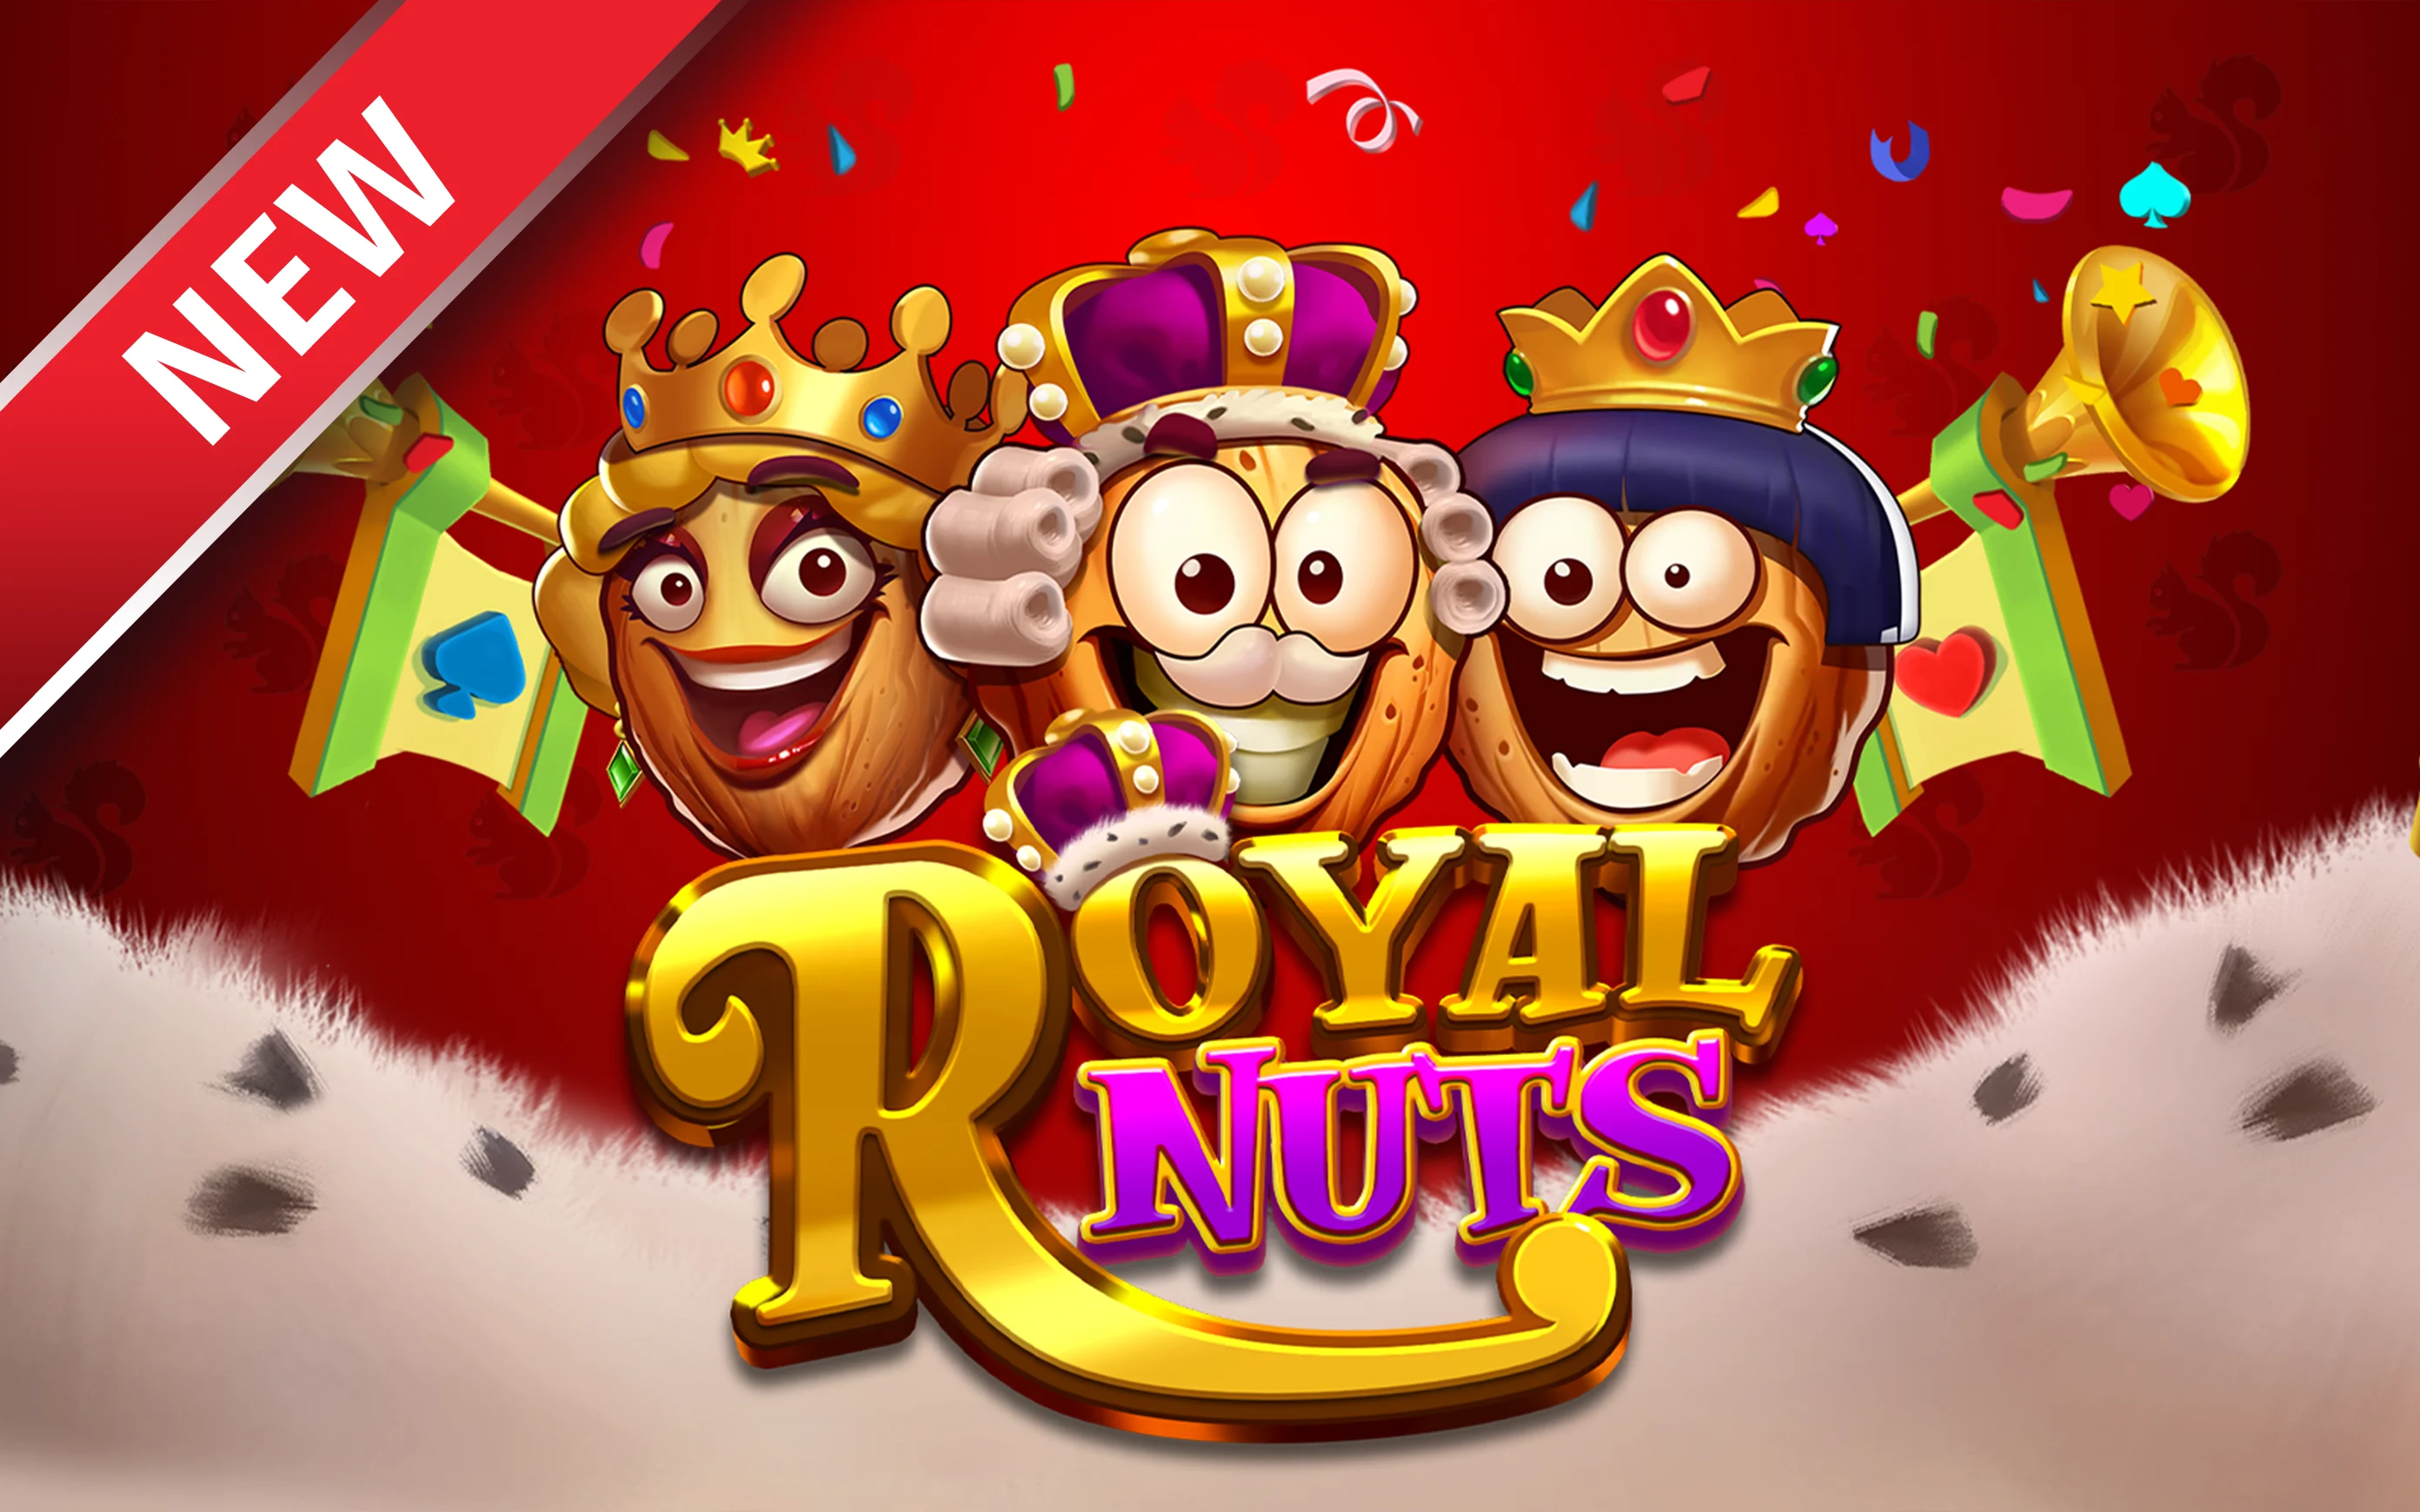 Gioca a Royal Nuts sul casino online Starcasino.be